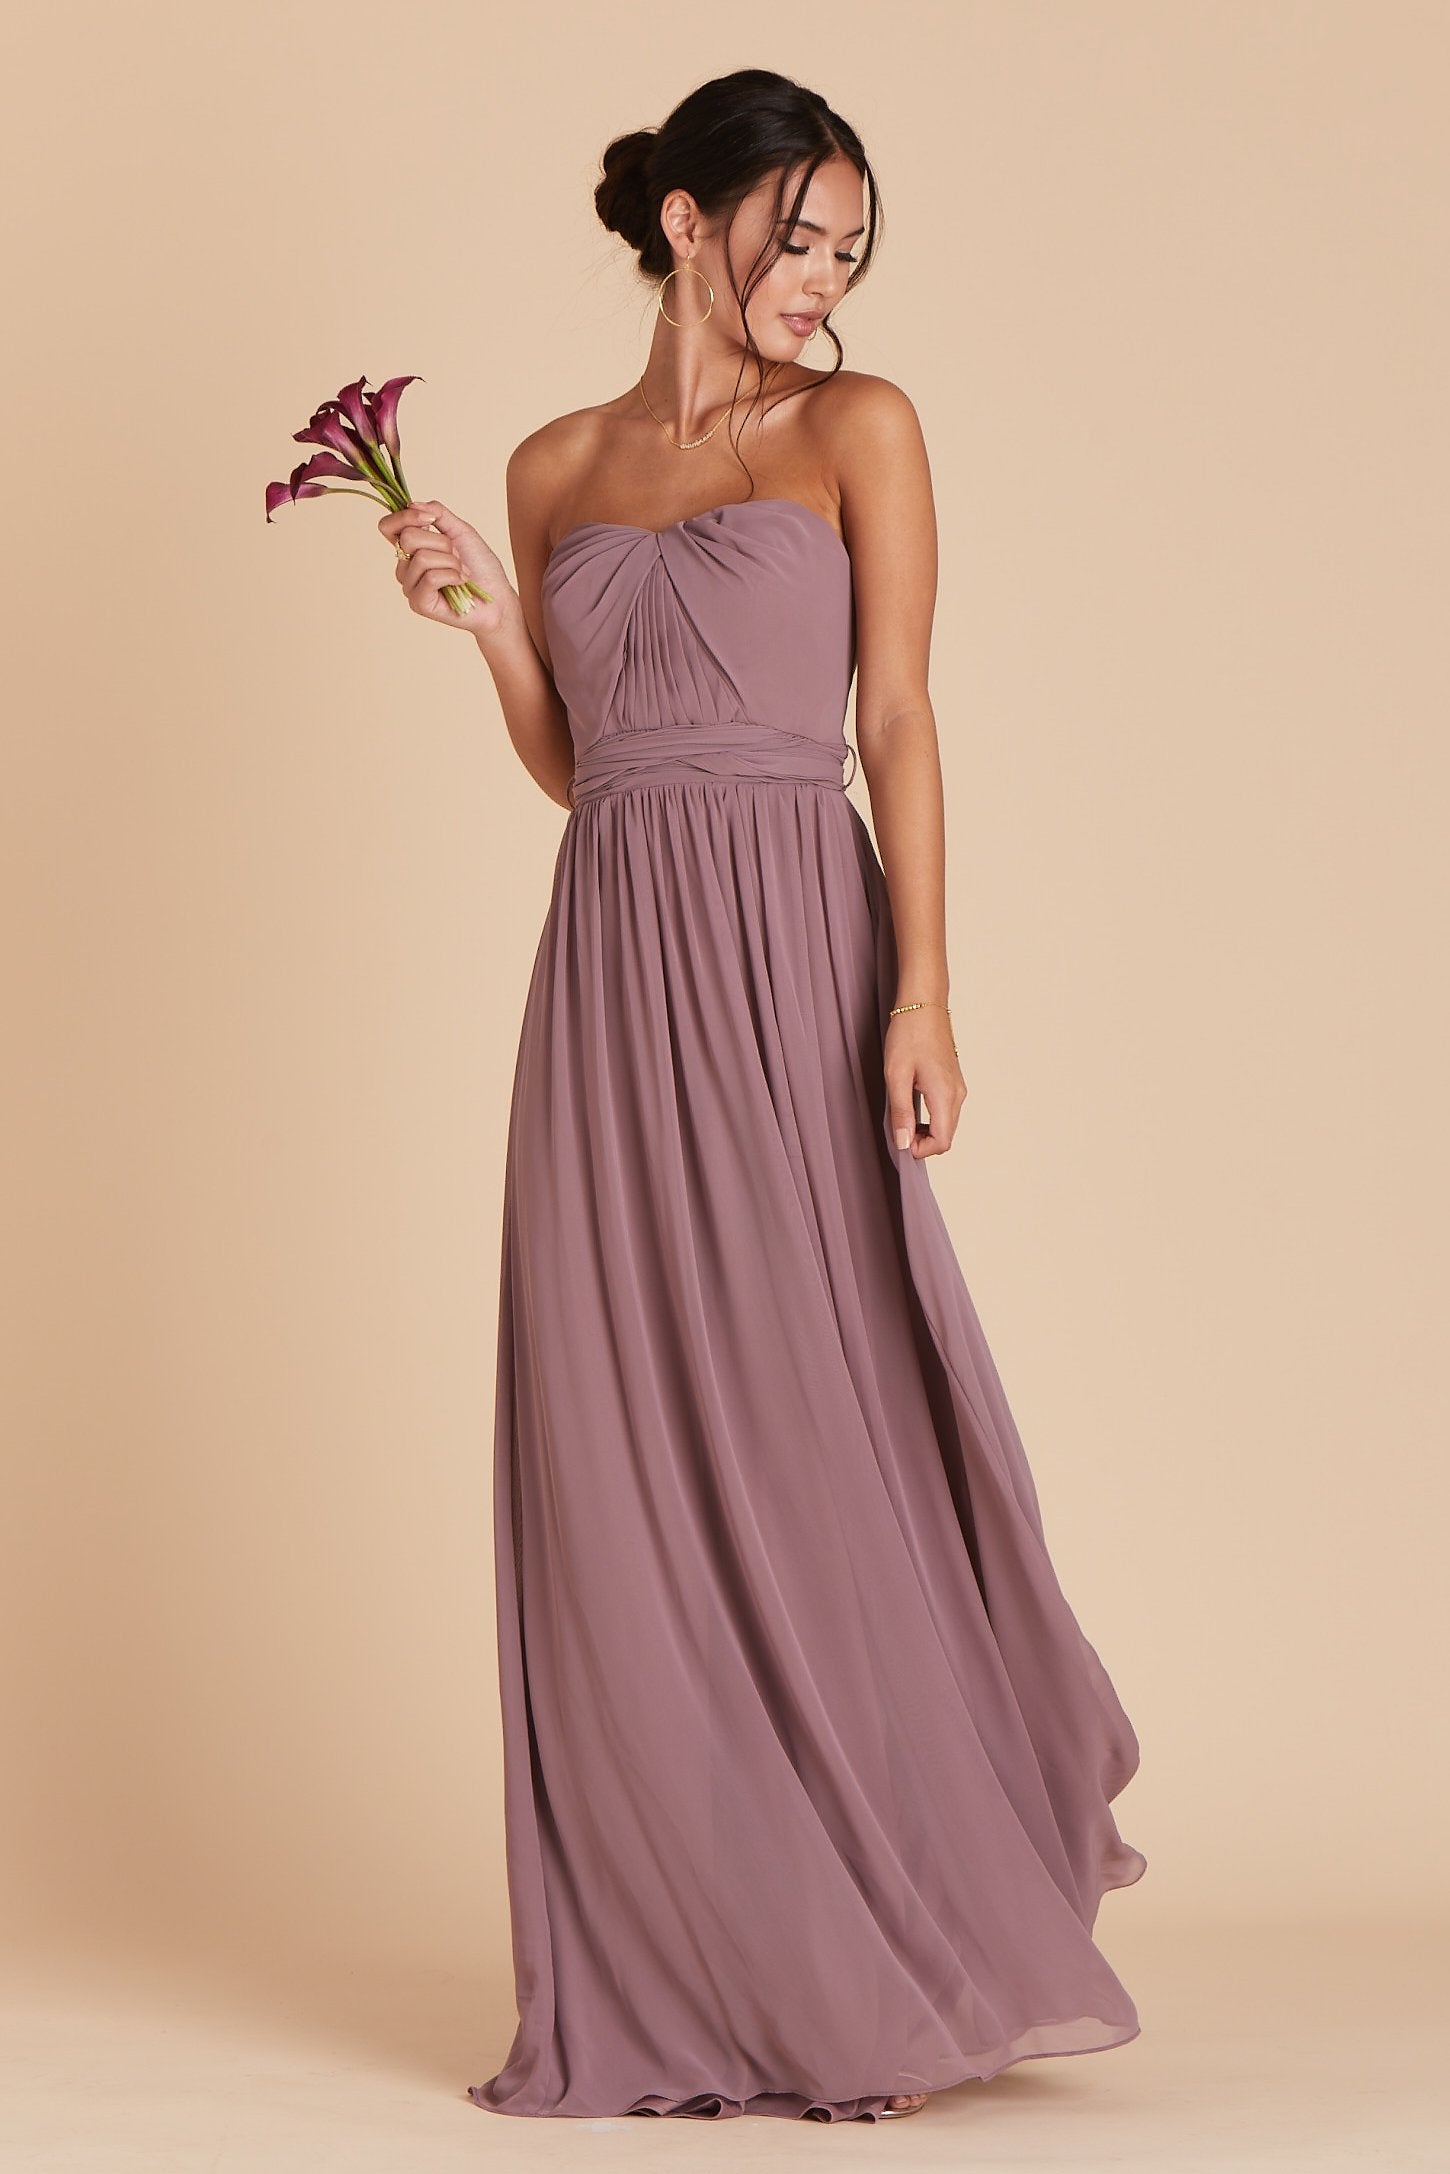 Grace convertible bridesmaid dress in Dark Mauve Purple Chiffon by Birdy Grey, front view